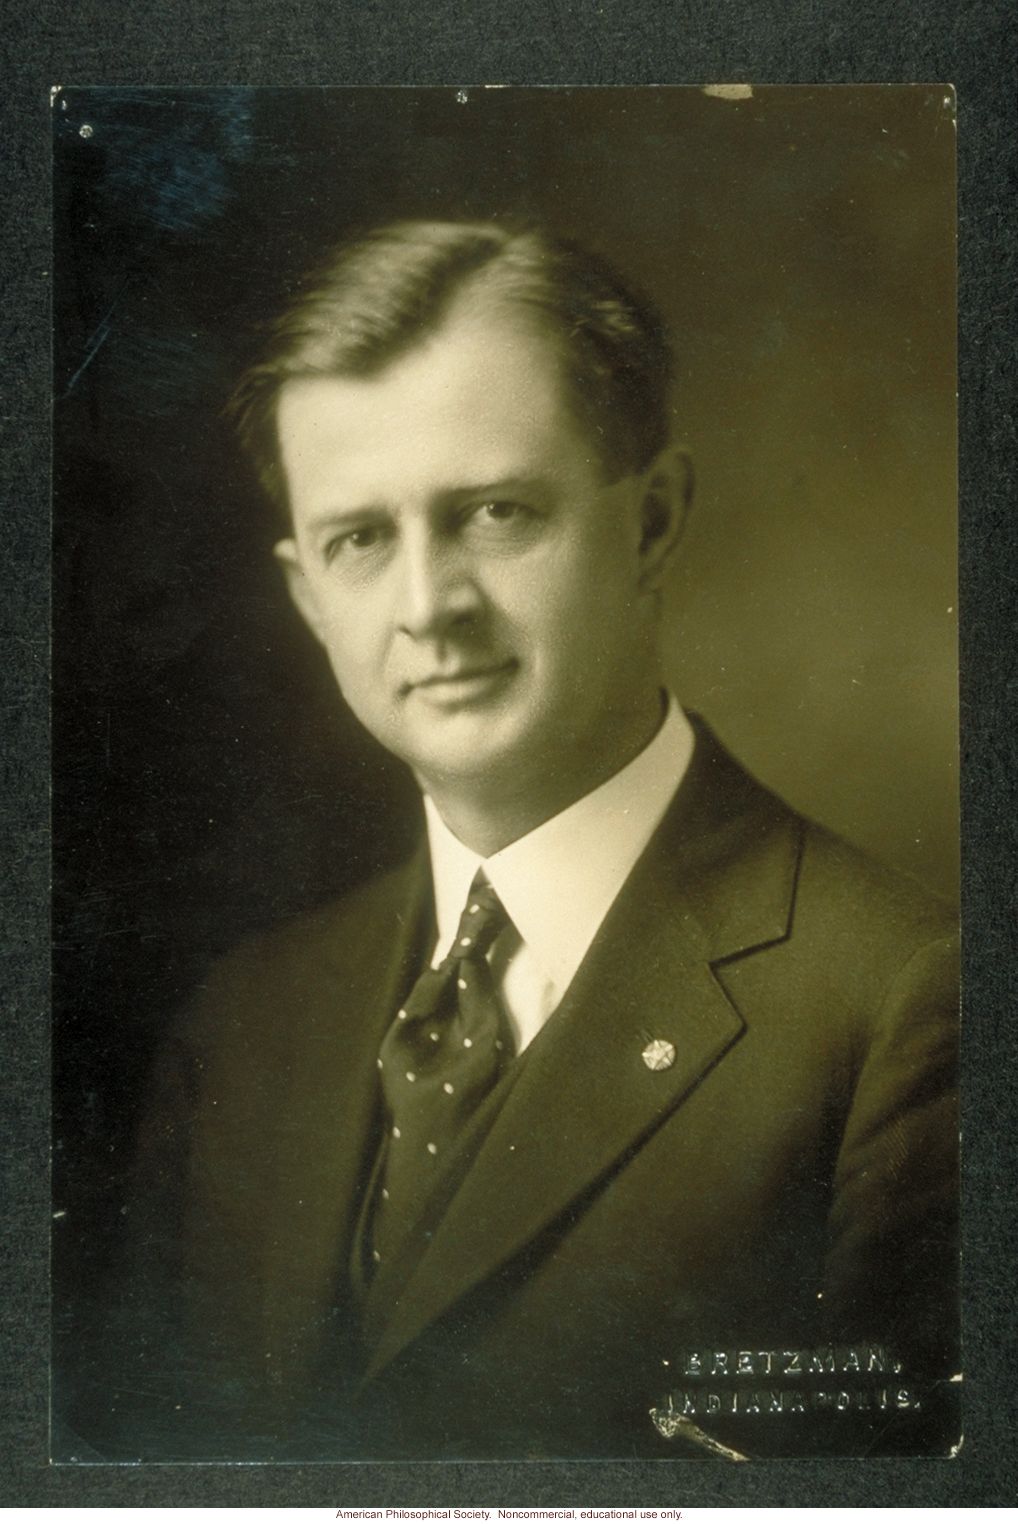 Arthur H. Estabrook